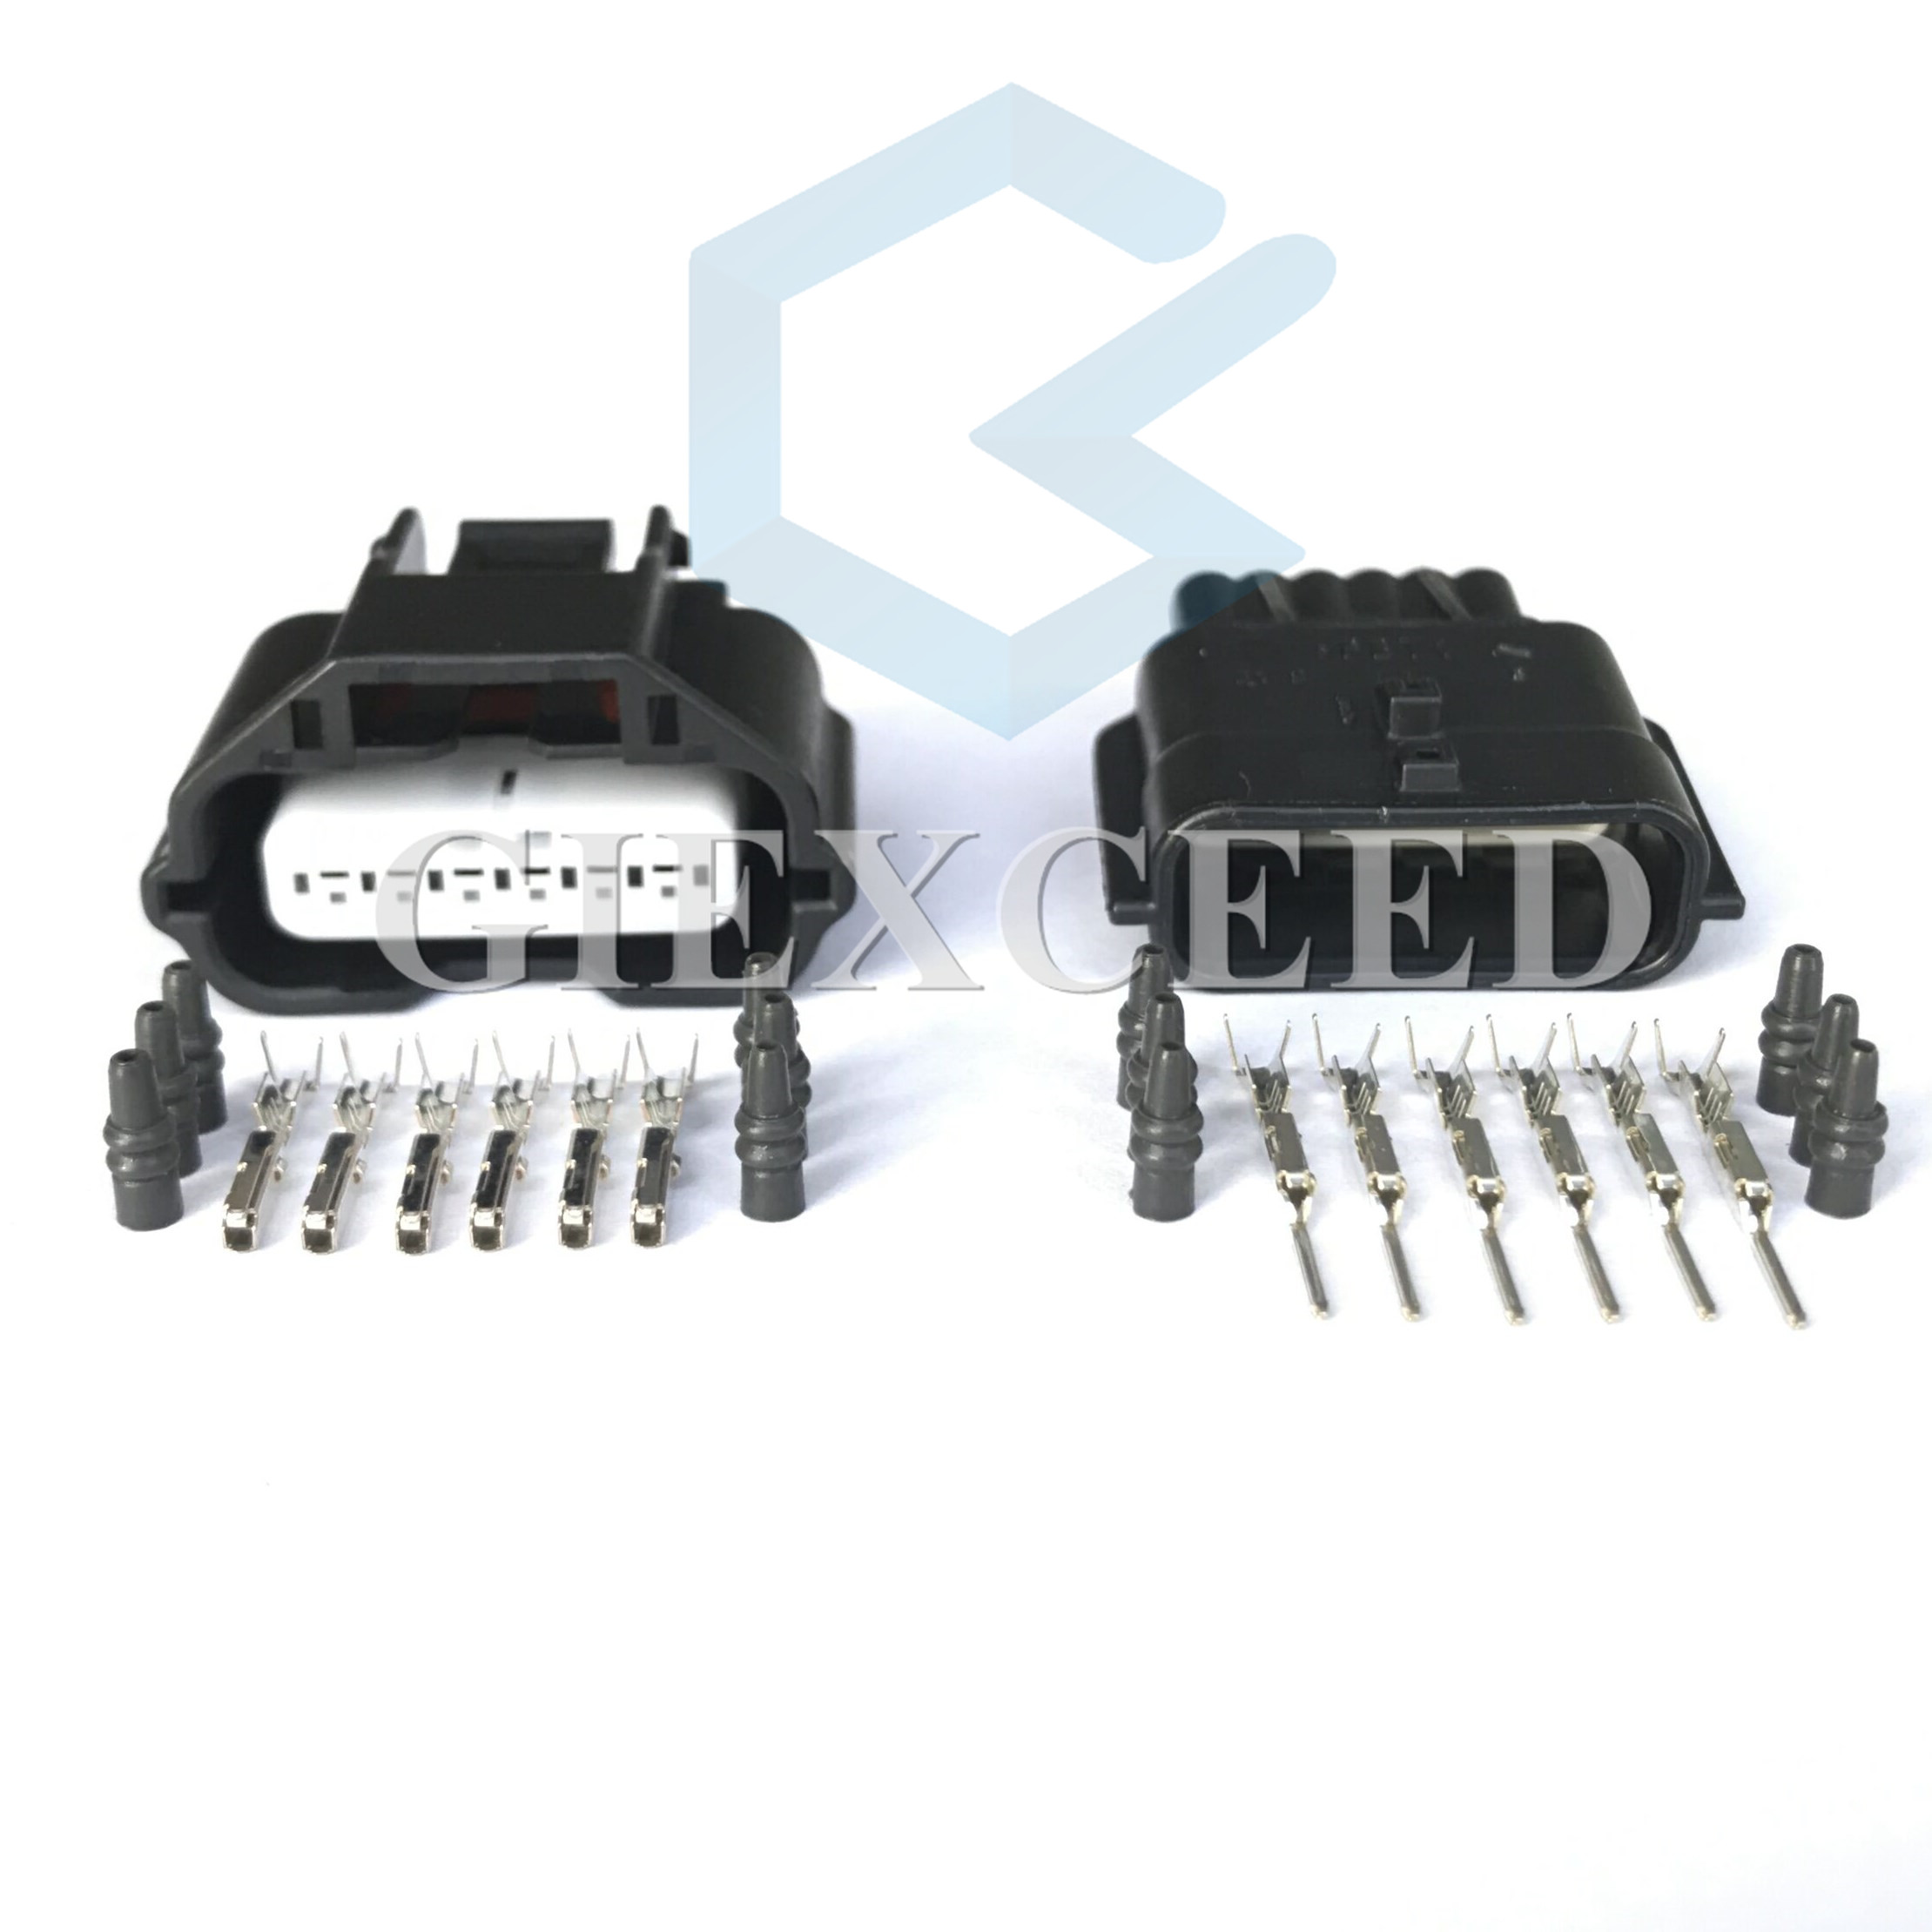 6 Pin 7283-8850-30 7282-8850-30 Auto Sensor Plug Air Flow Meter Connector For Nissan 350Z R35 GT-R V35